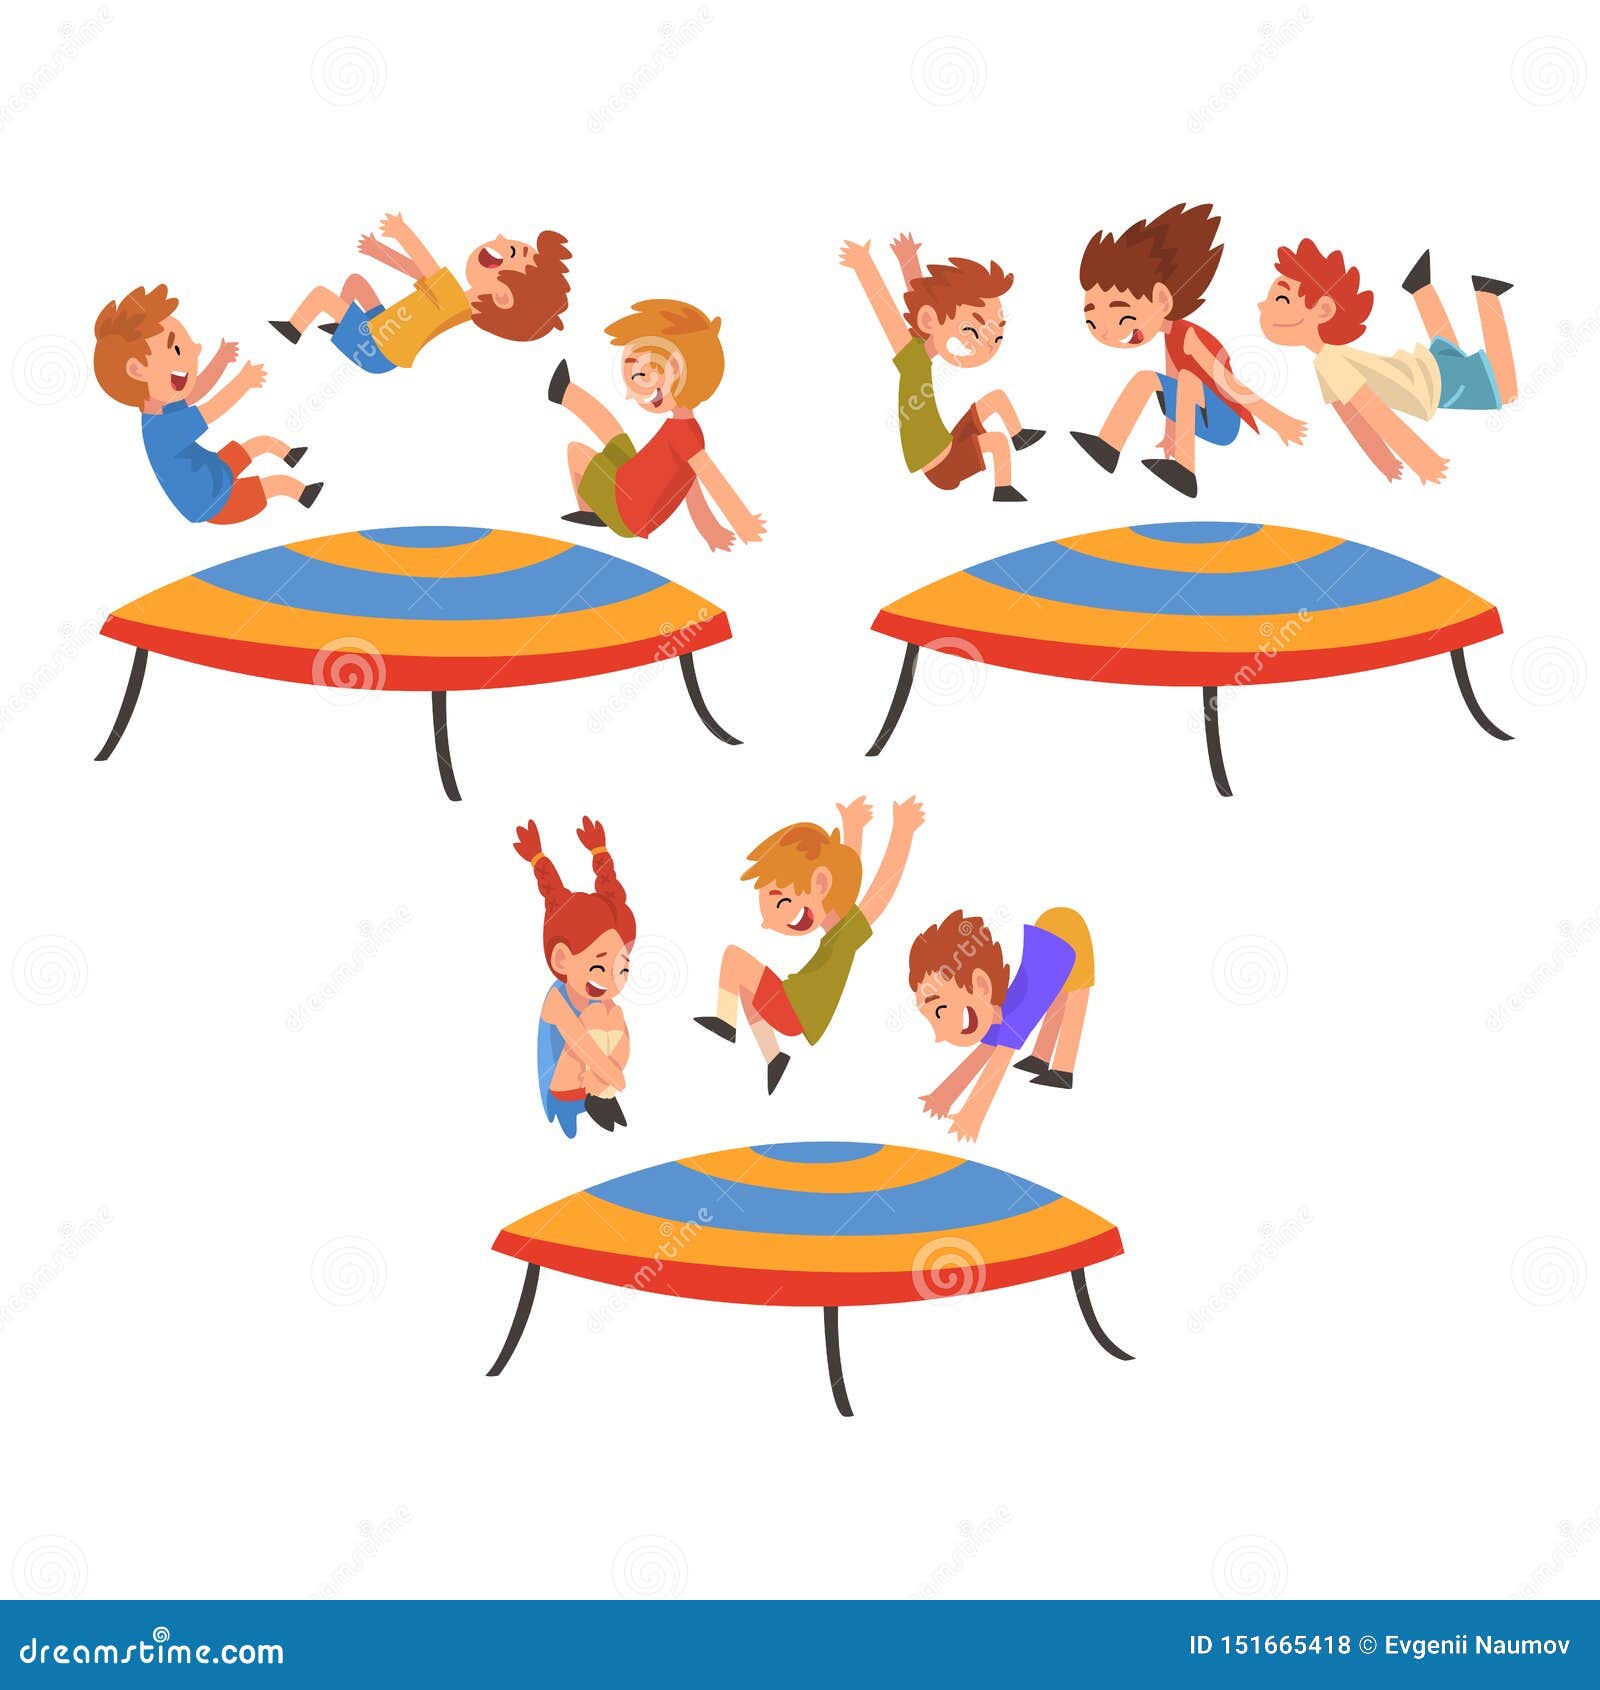 Happy preschool kid jumping on trampoline Vector Image